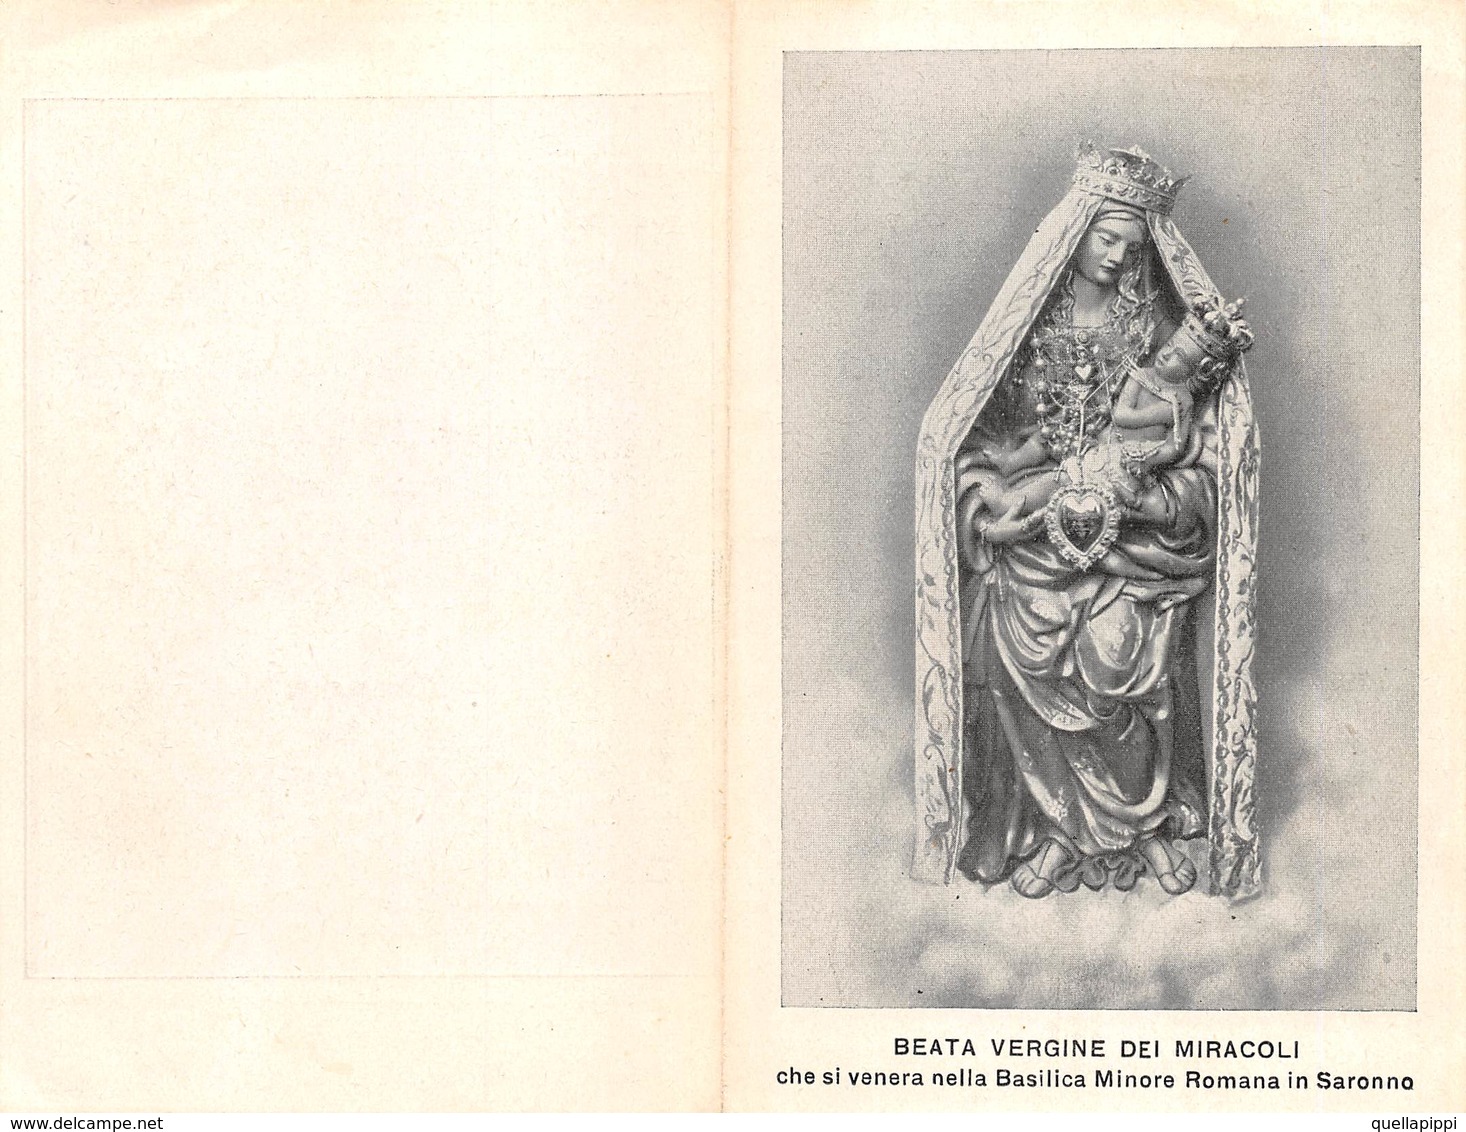 08039 "(VARESE) SARONNO - BEATA VERGINE DEI MIRACOLI" 1923-FOTO PREV. PARR. MONS. CARLO CROCI. PIEGHEVOLE ORIG. - Religion & Esotericism